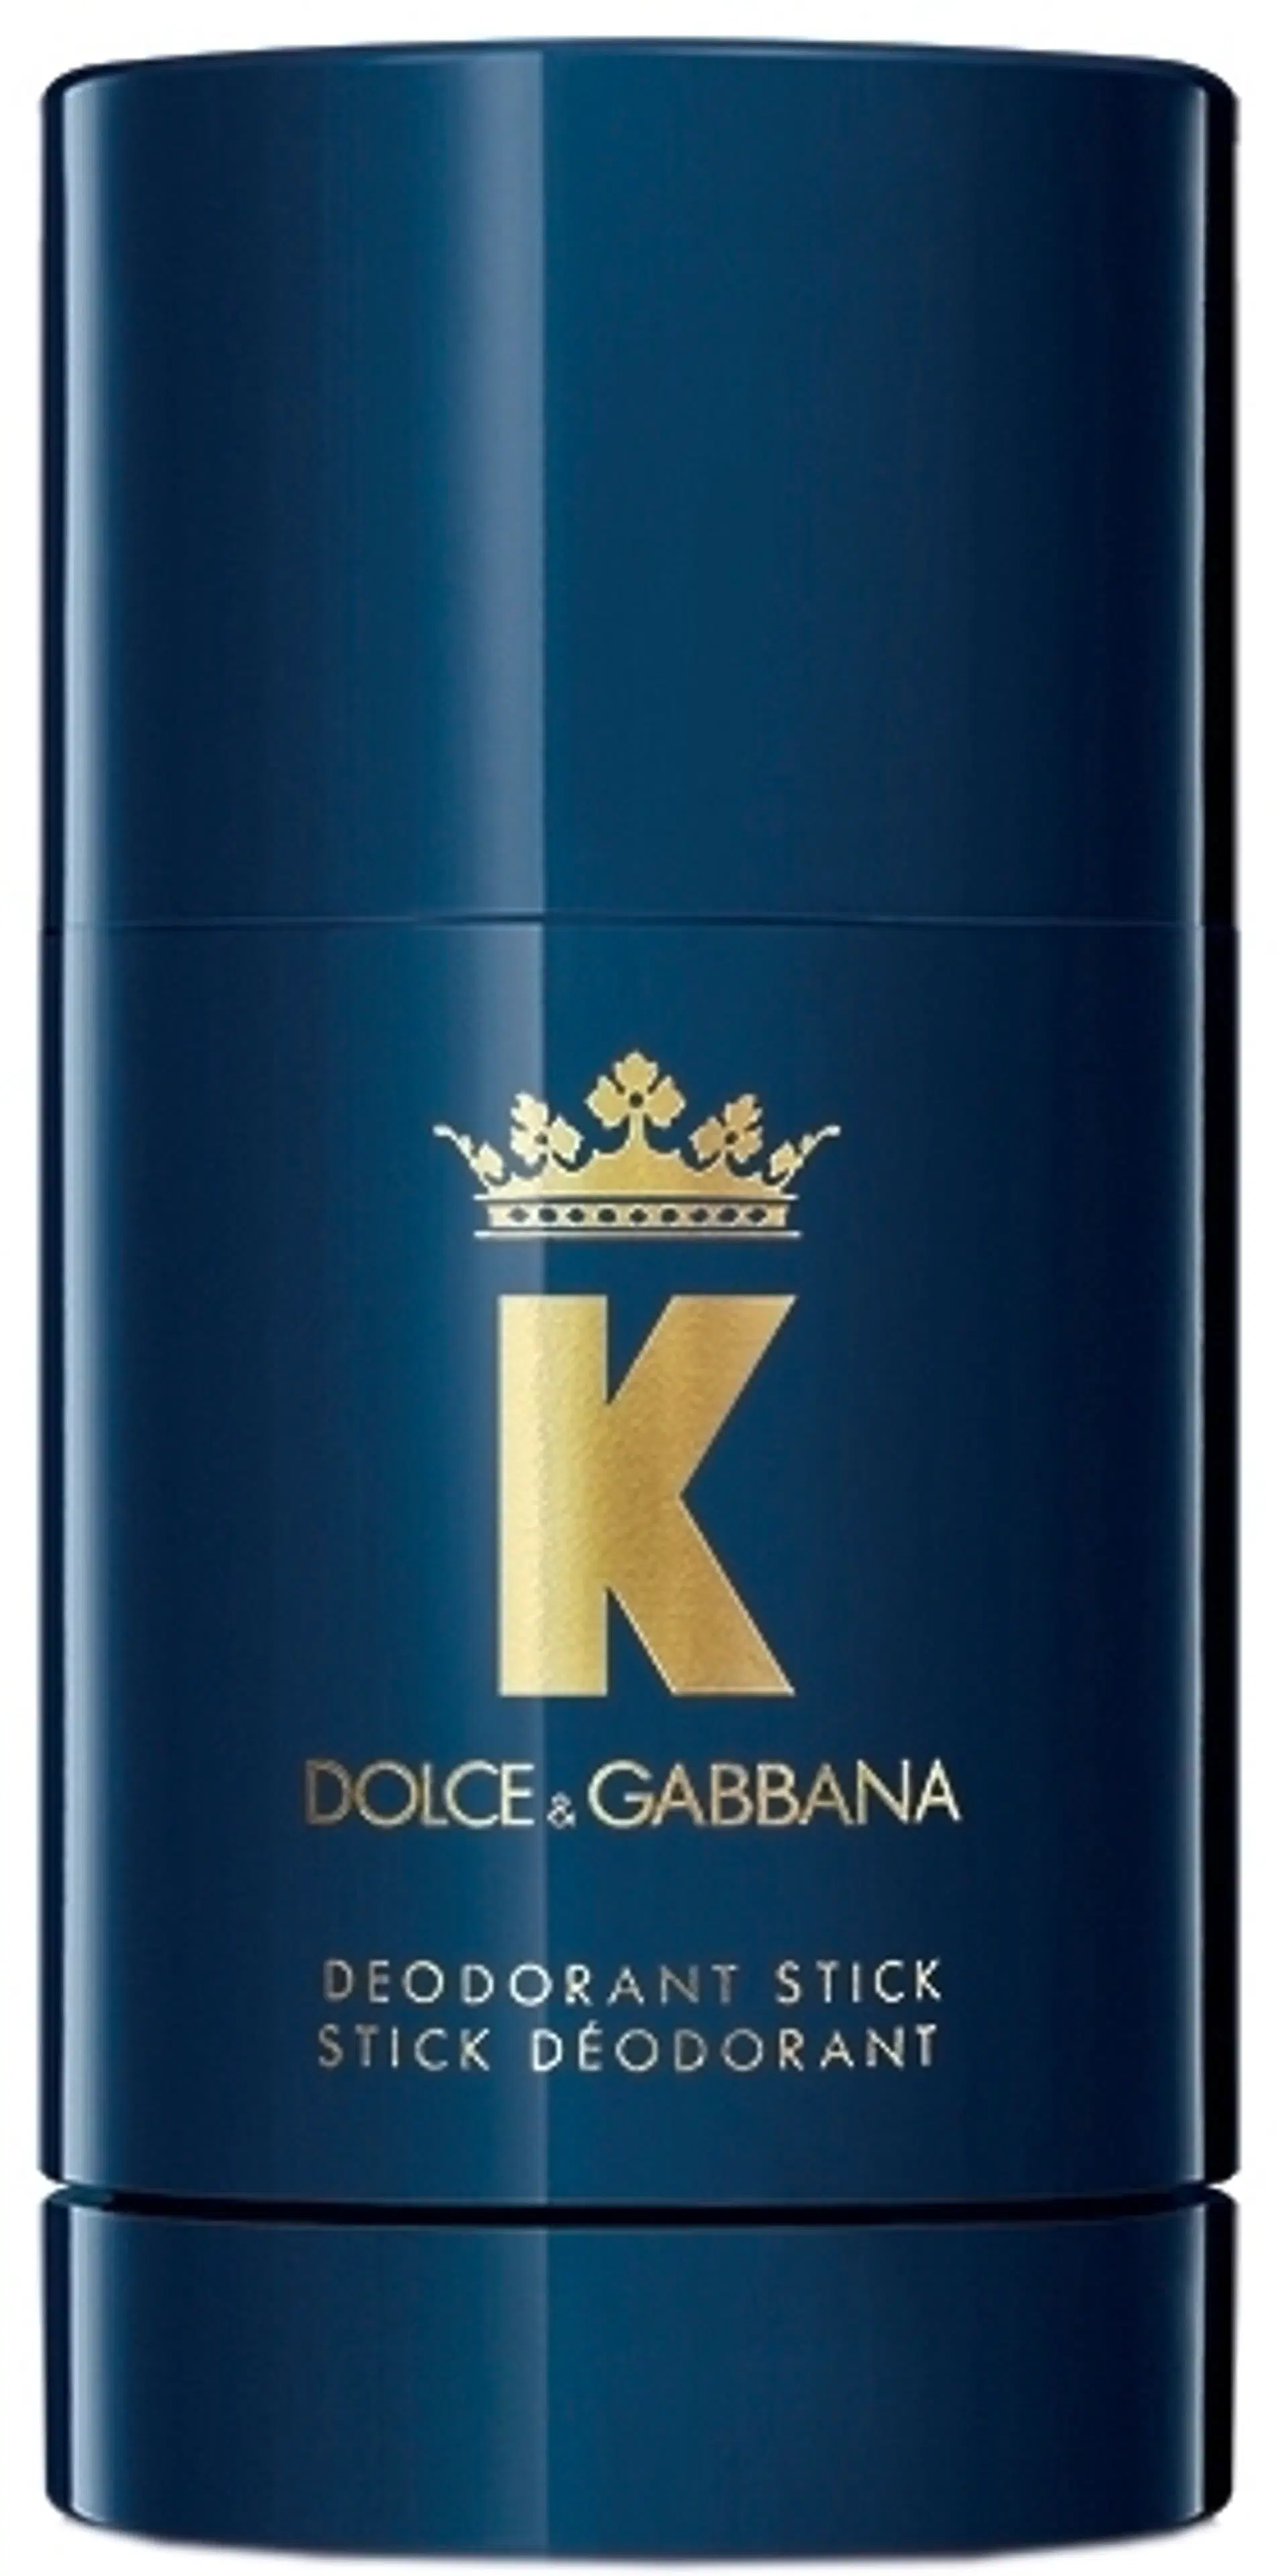 DOLCE & GABBANA K Deodorant stick 75 g